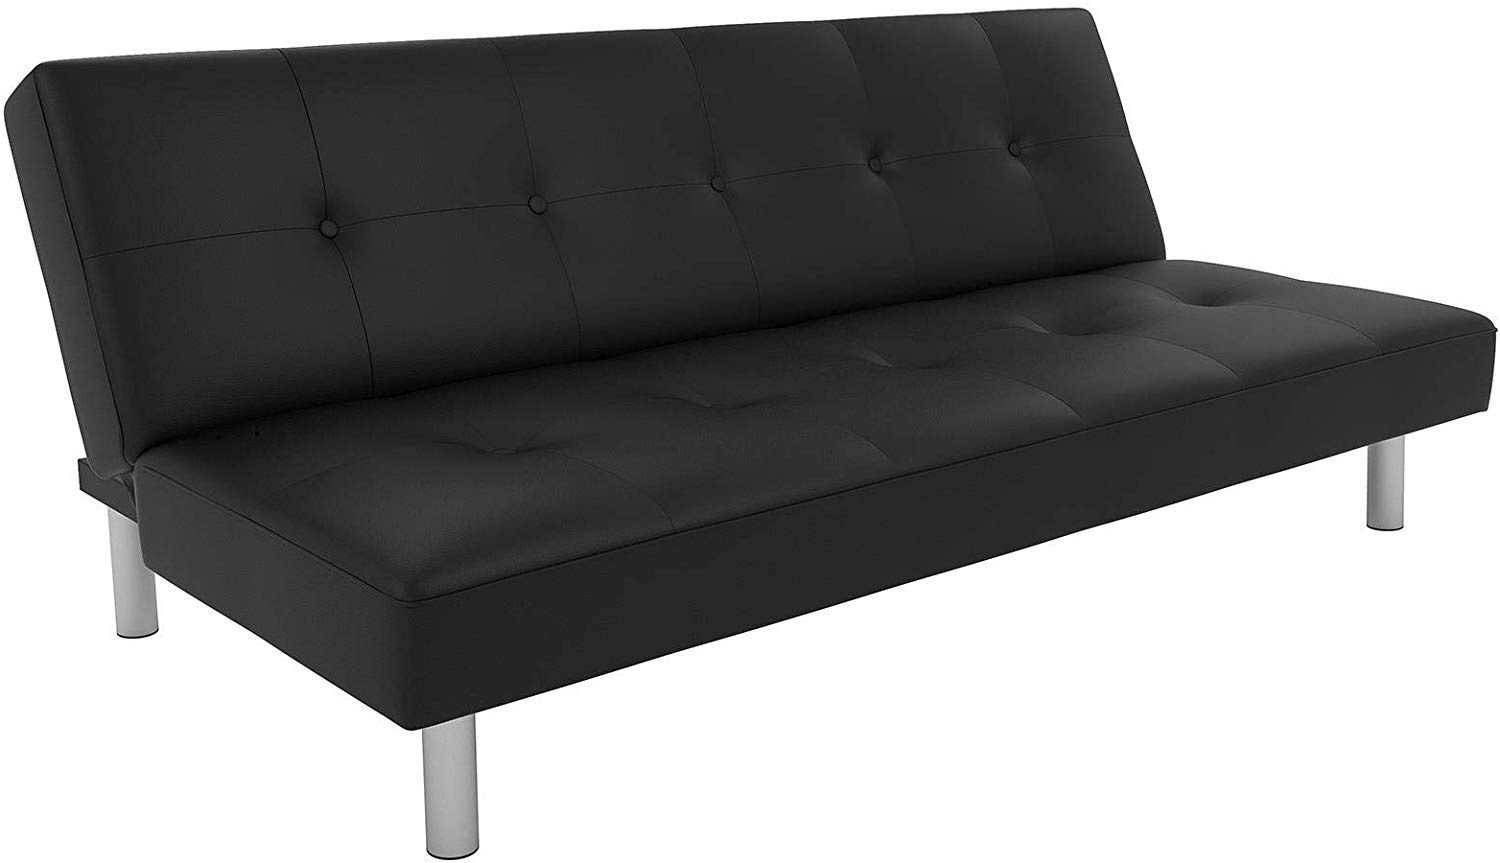 Black faux leather futon